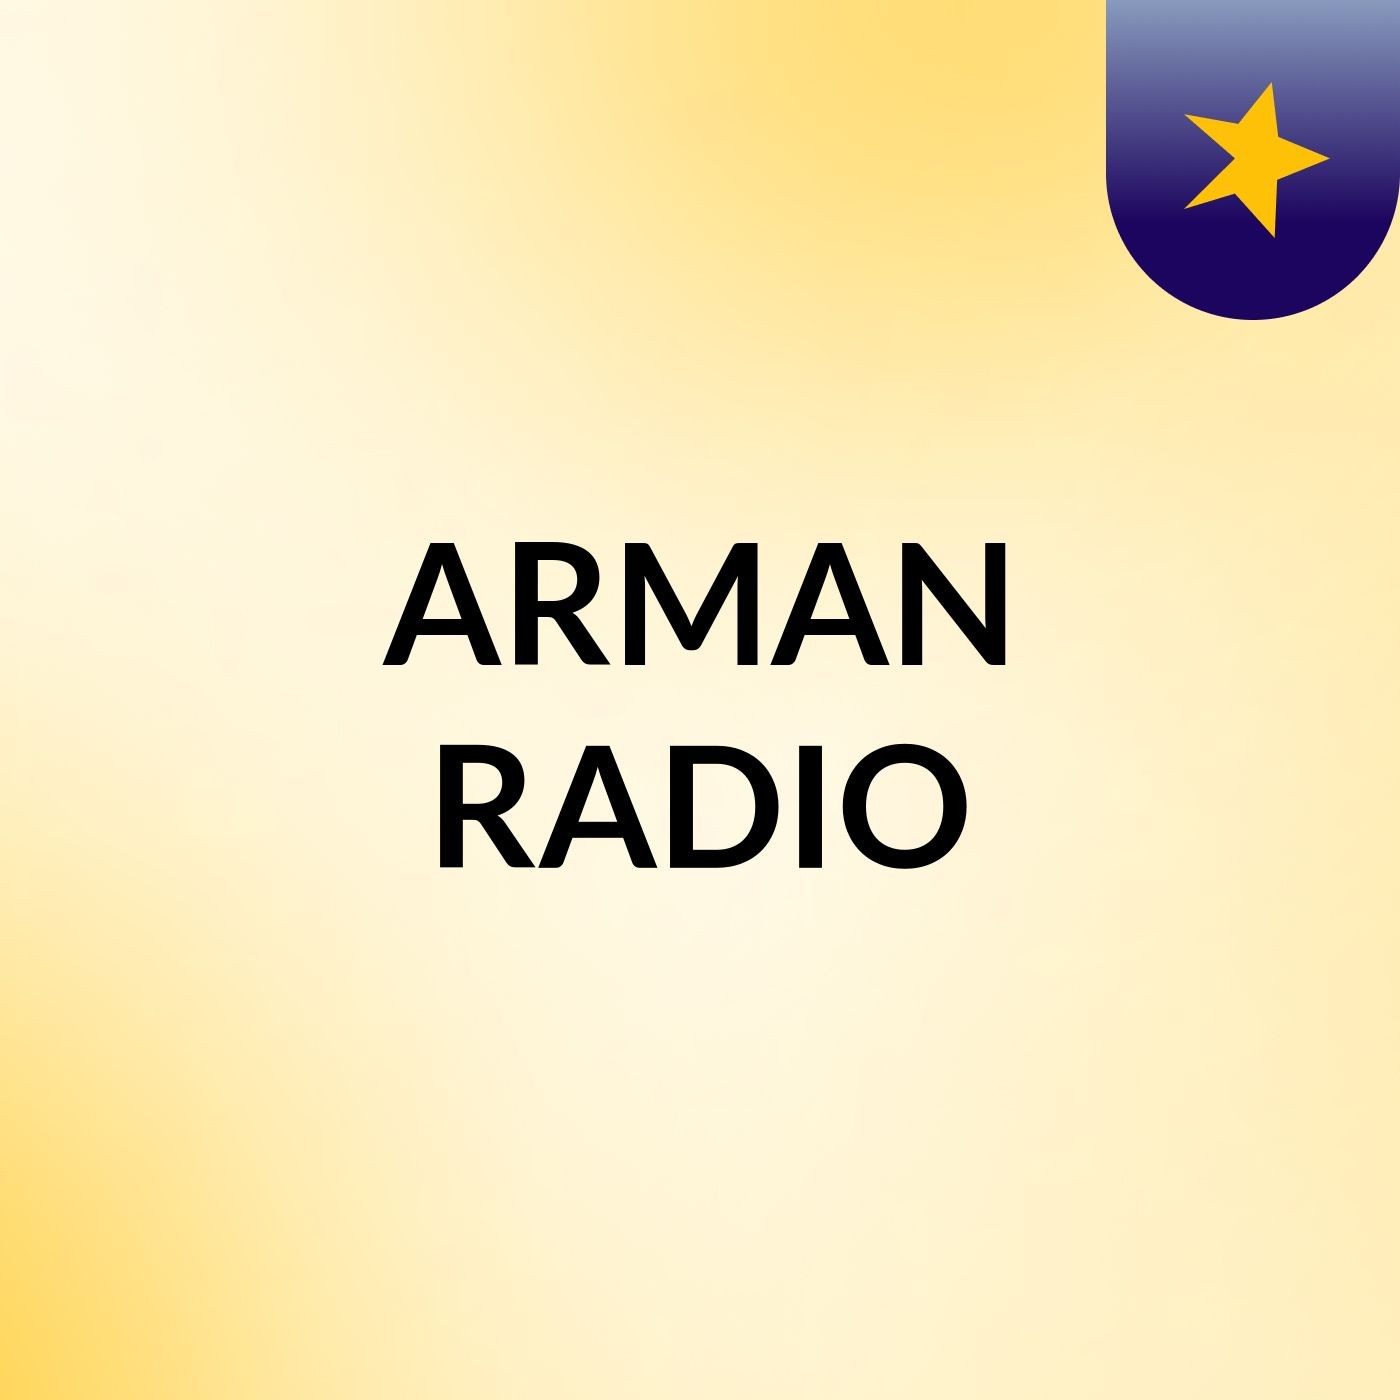 ARMAN RADIO